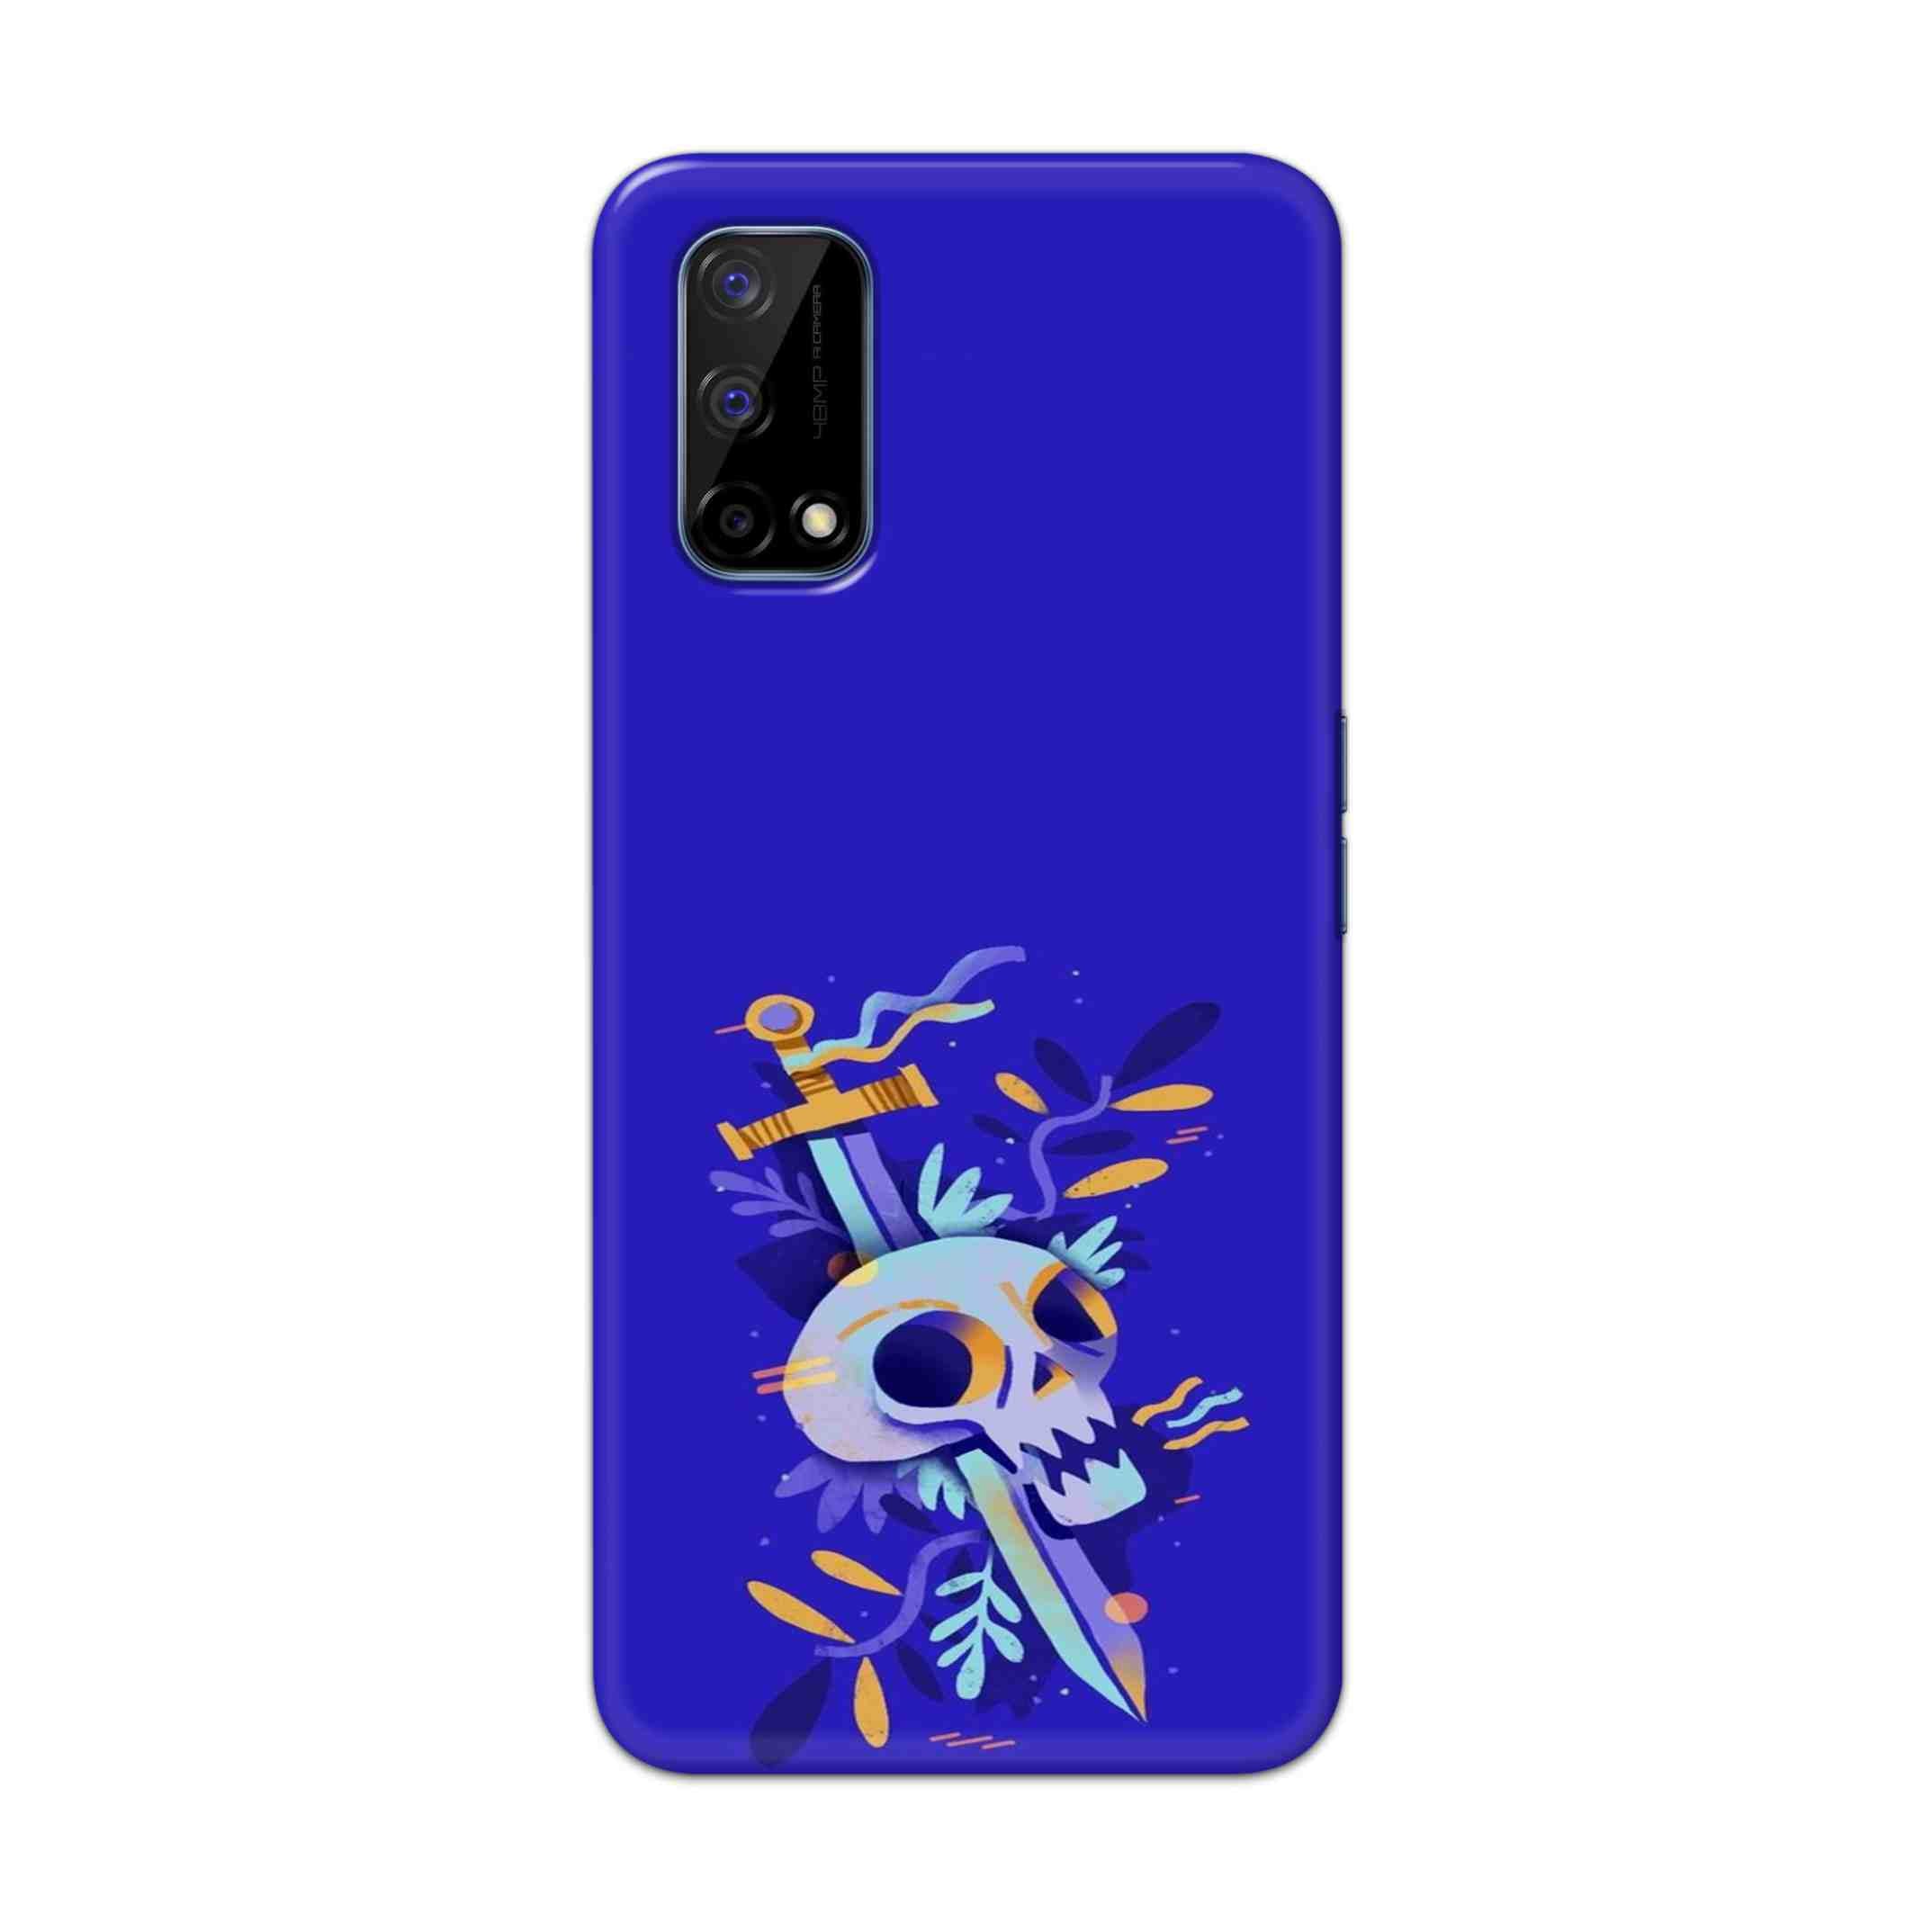 Buy Blue Skull Hard Back Mobile Phone Case Cover For Realme Narzo 30 Pro Online